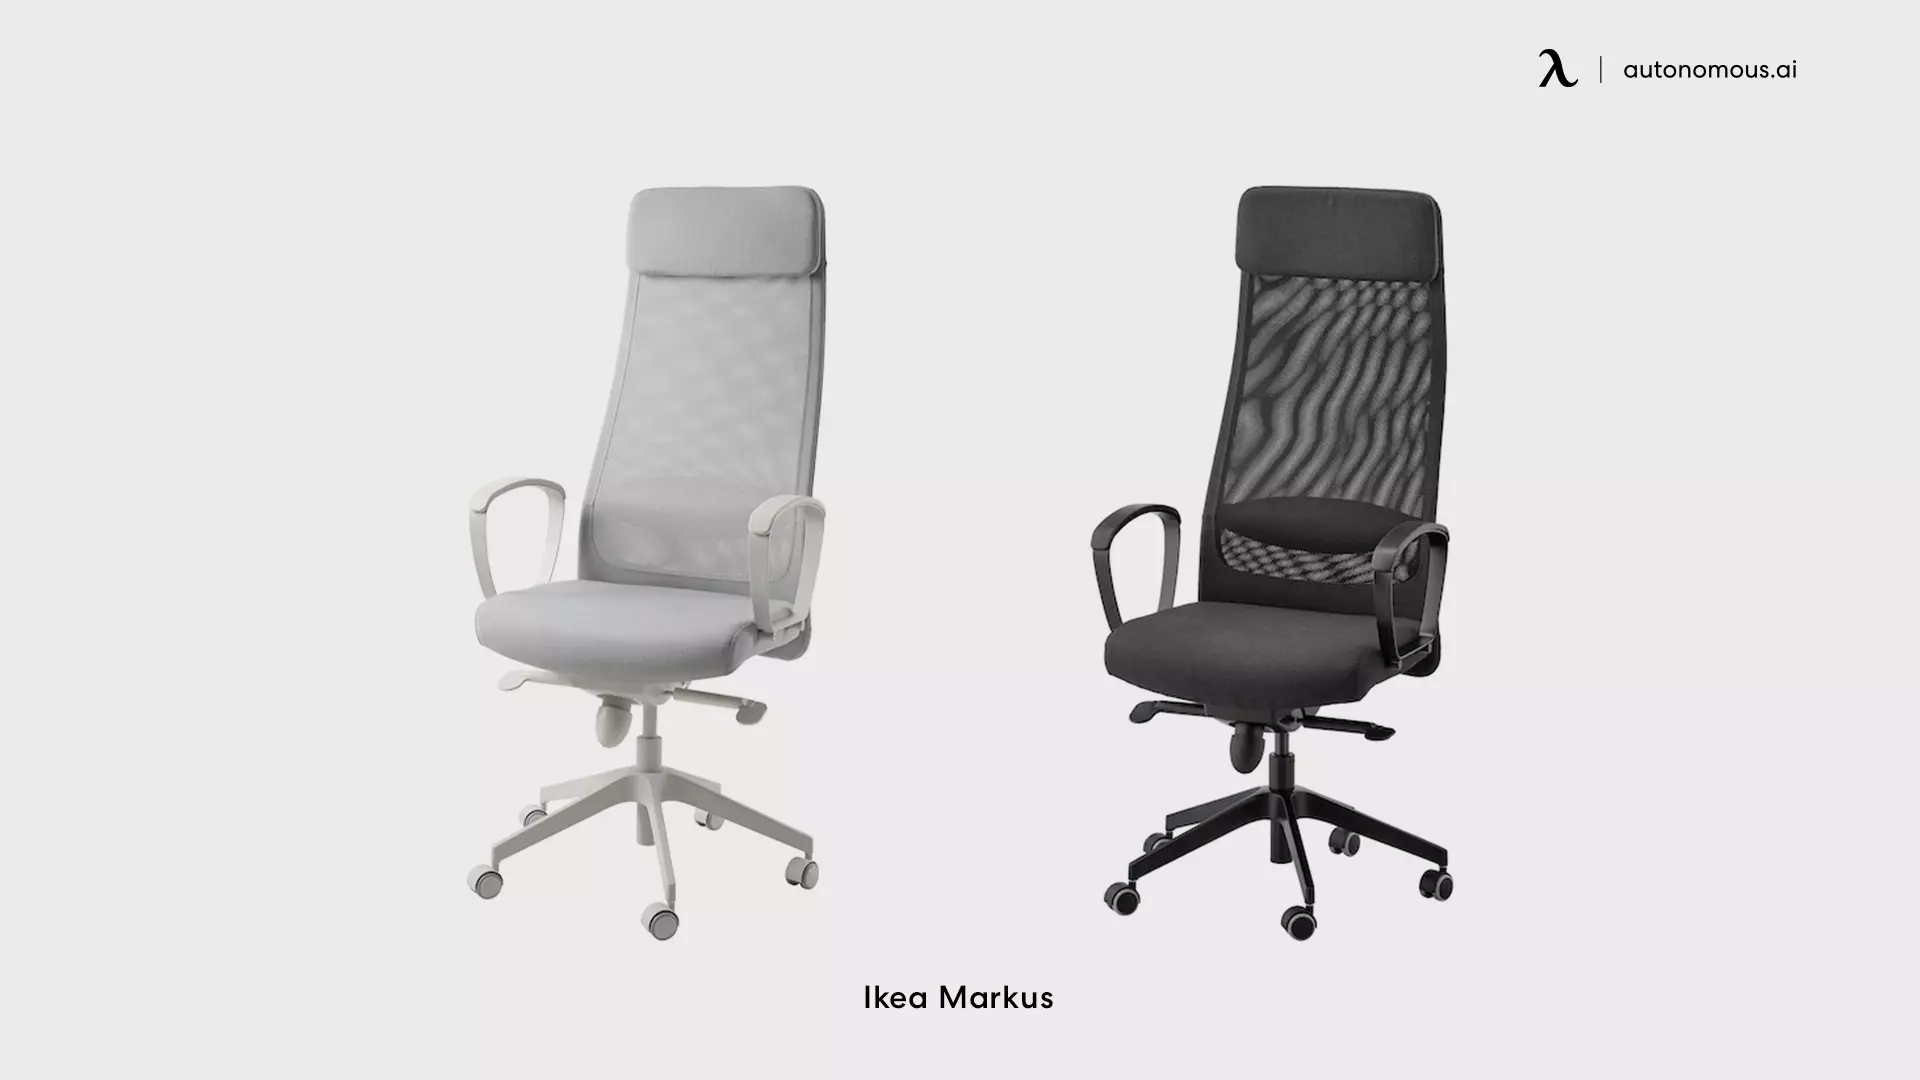 IKEA Markus swivel chair